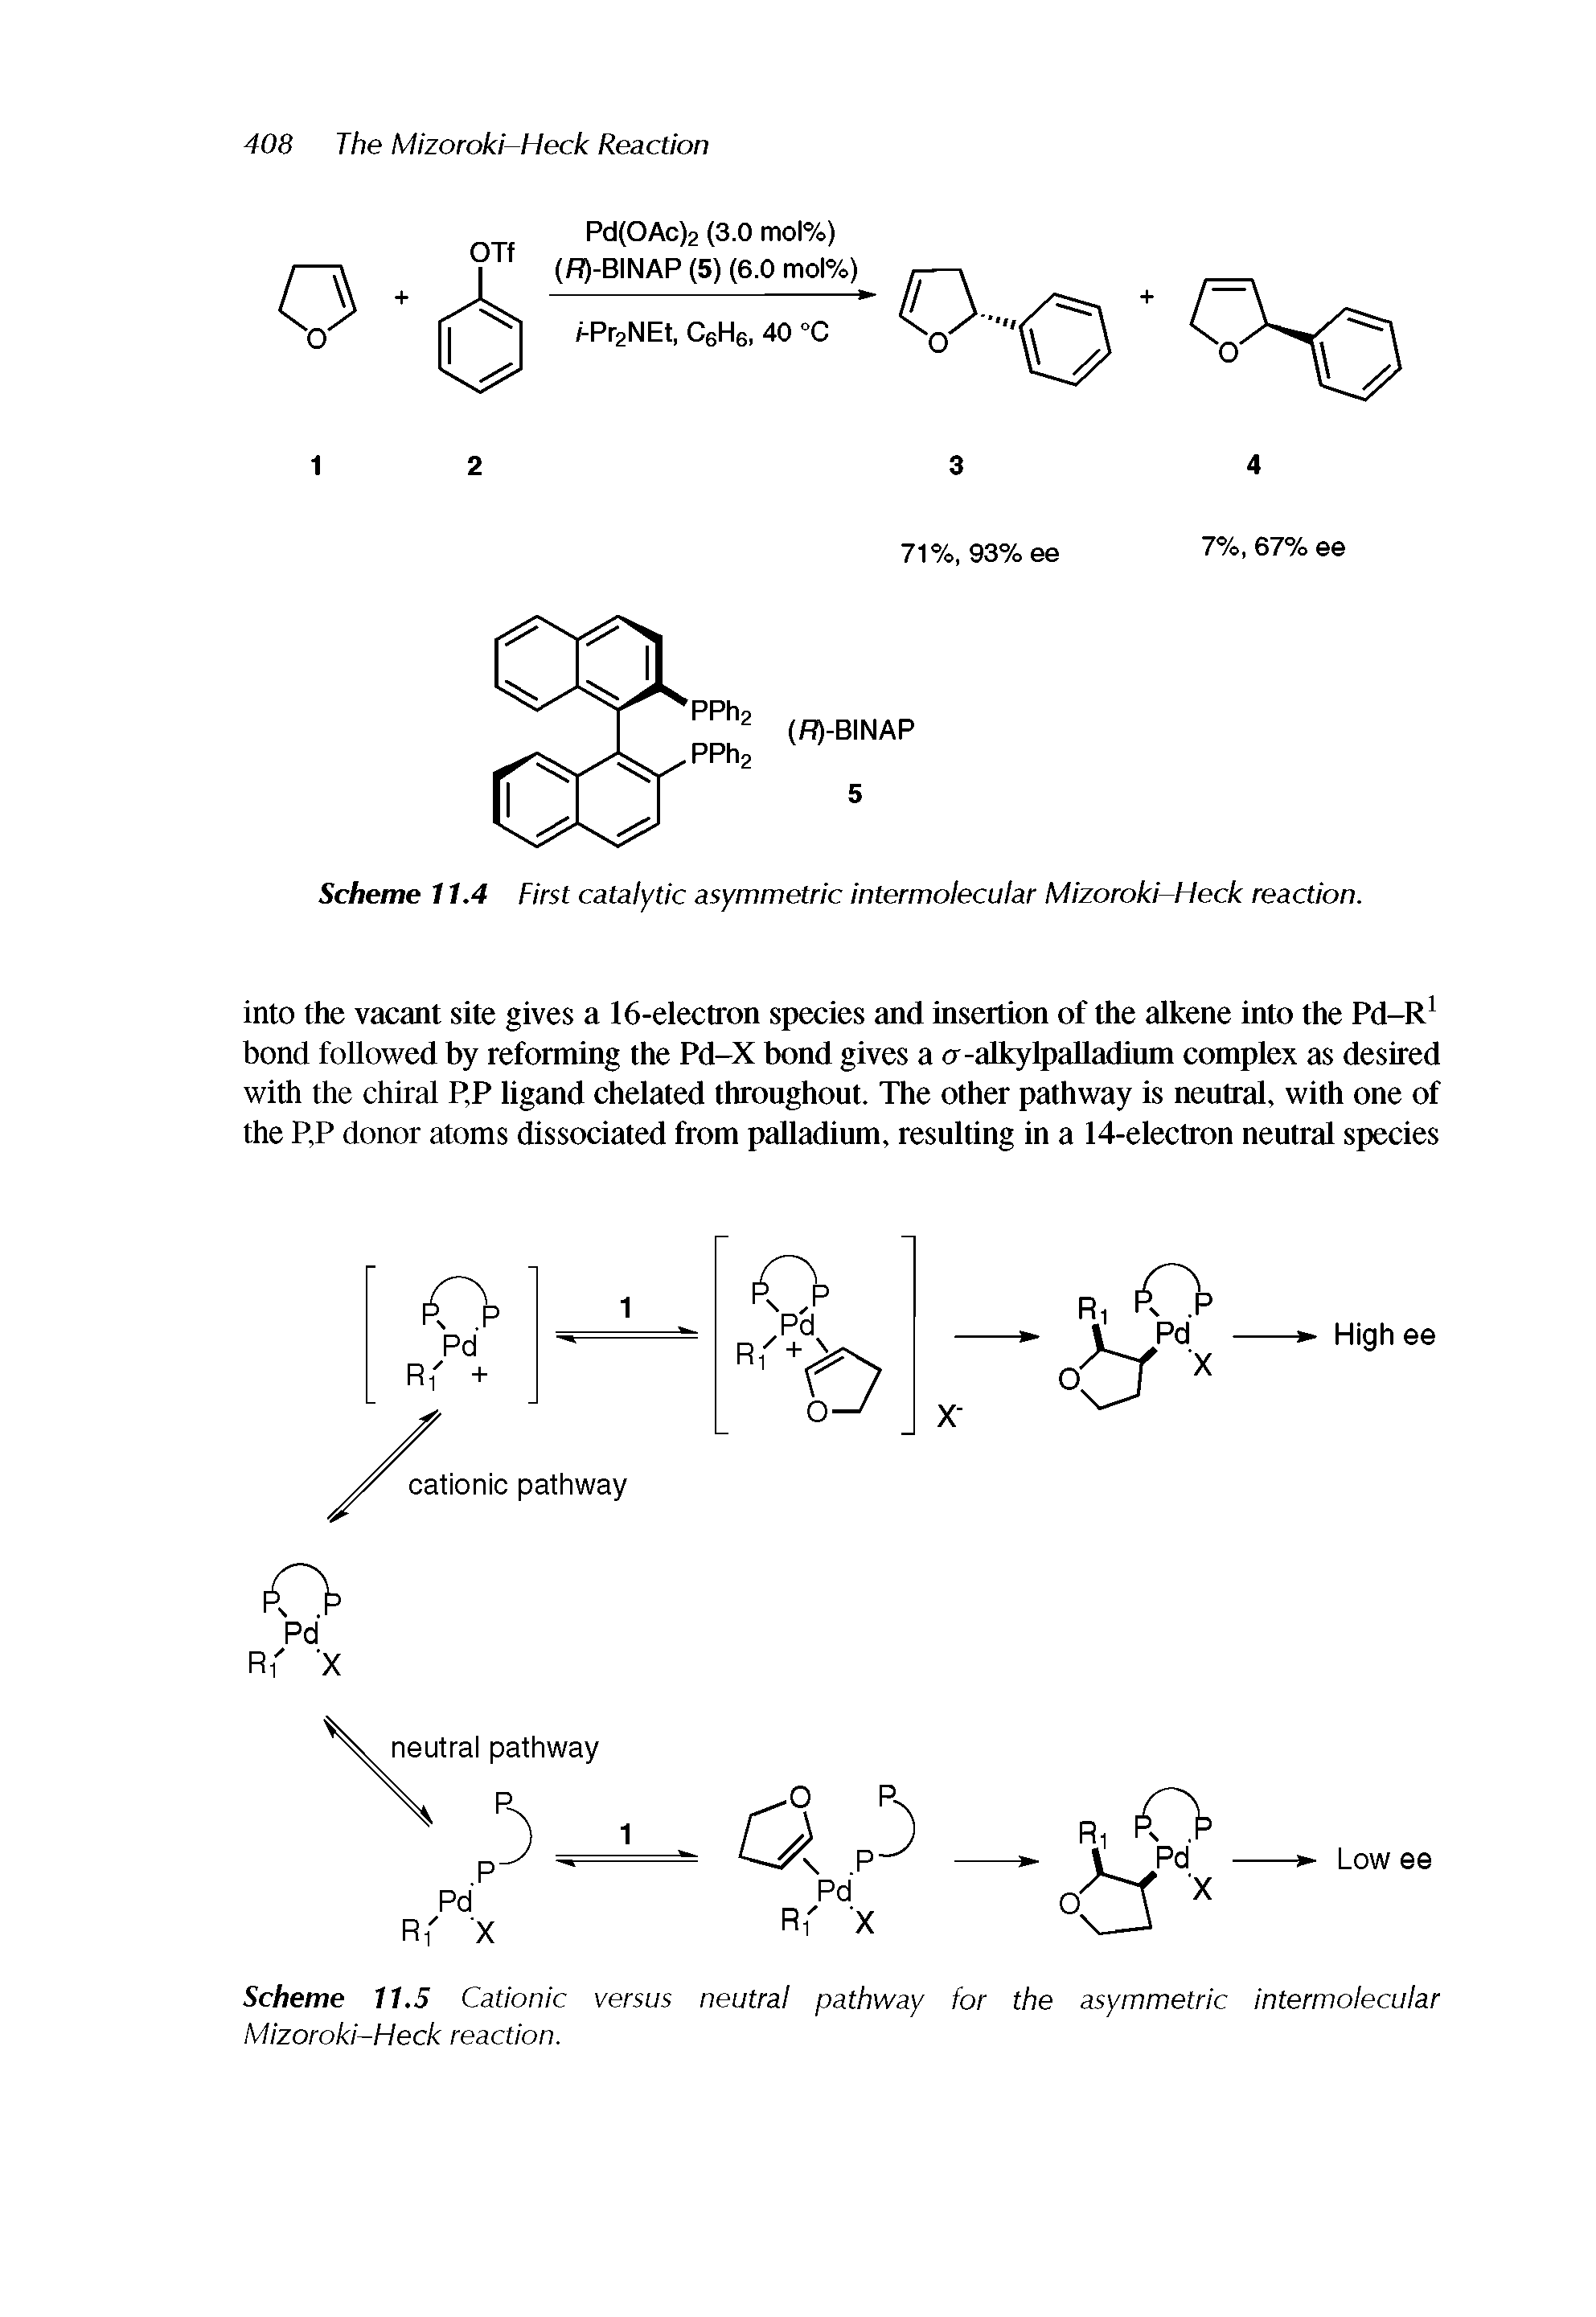 Scheme 11.5 Cationic versus neutral pathway for the asymmetric intermolecular Mizoroki-Heck reaction.